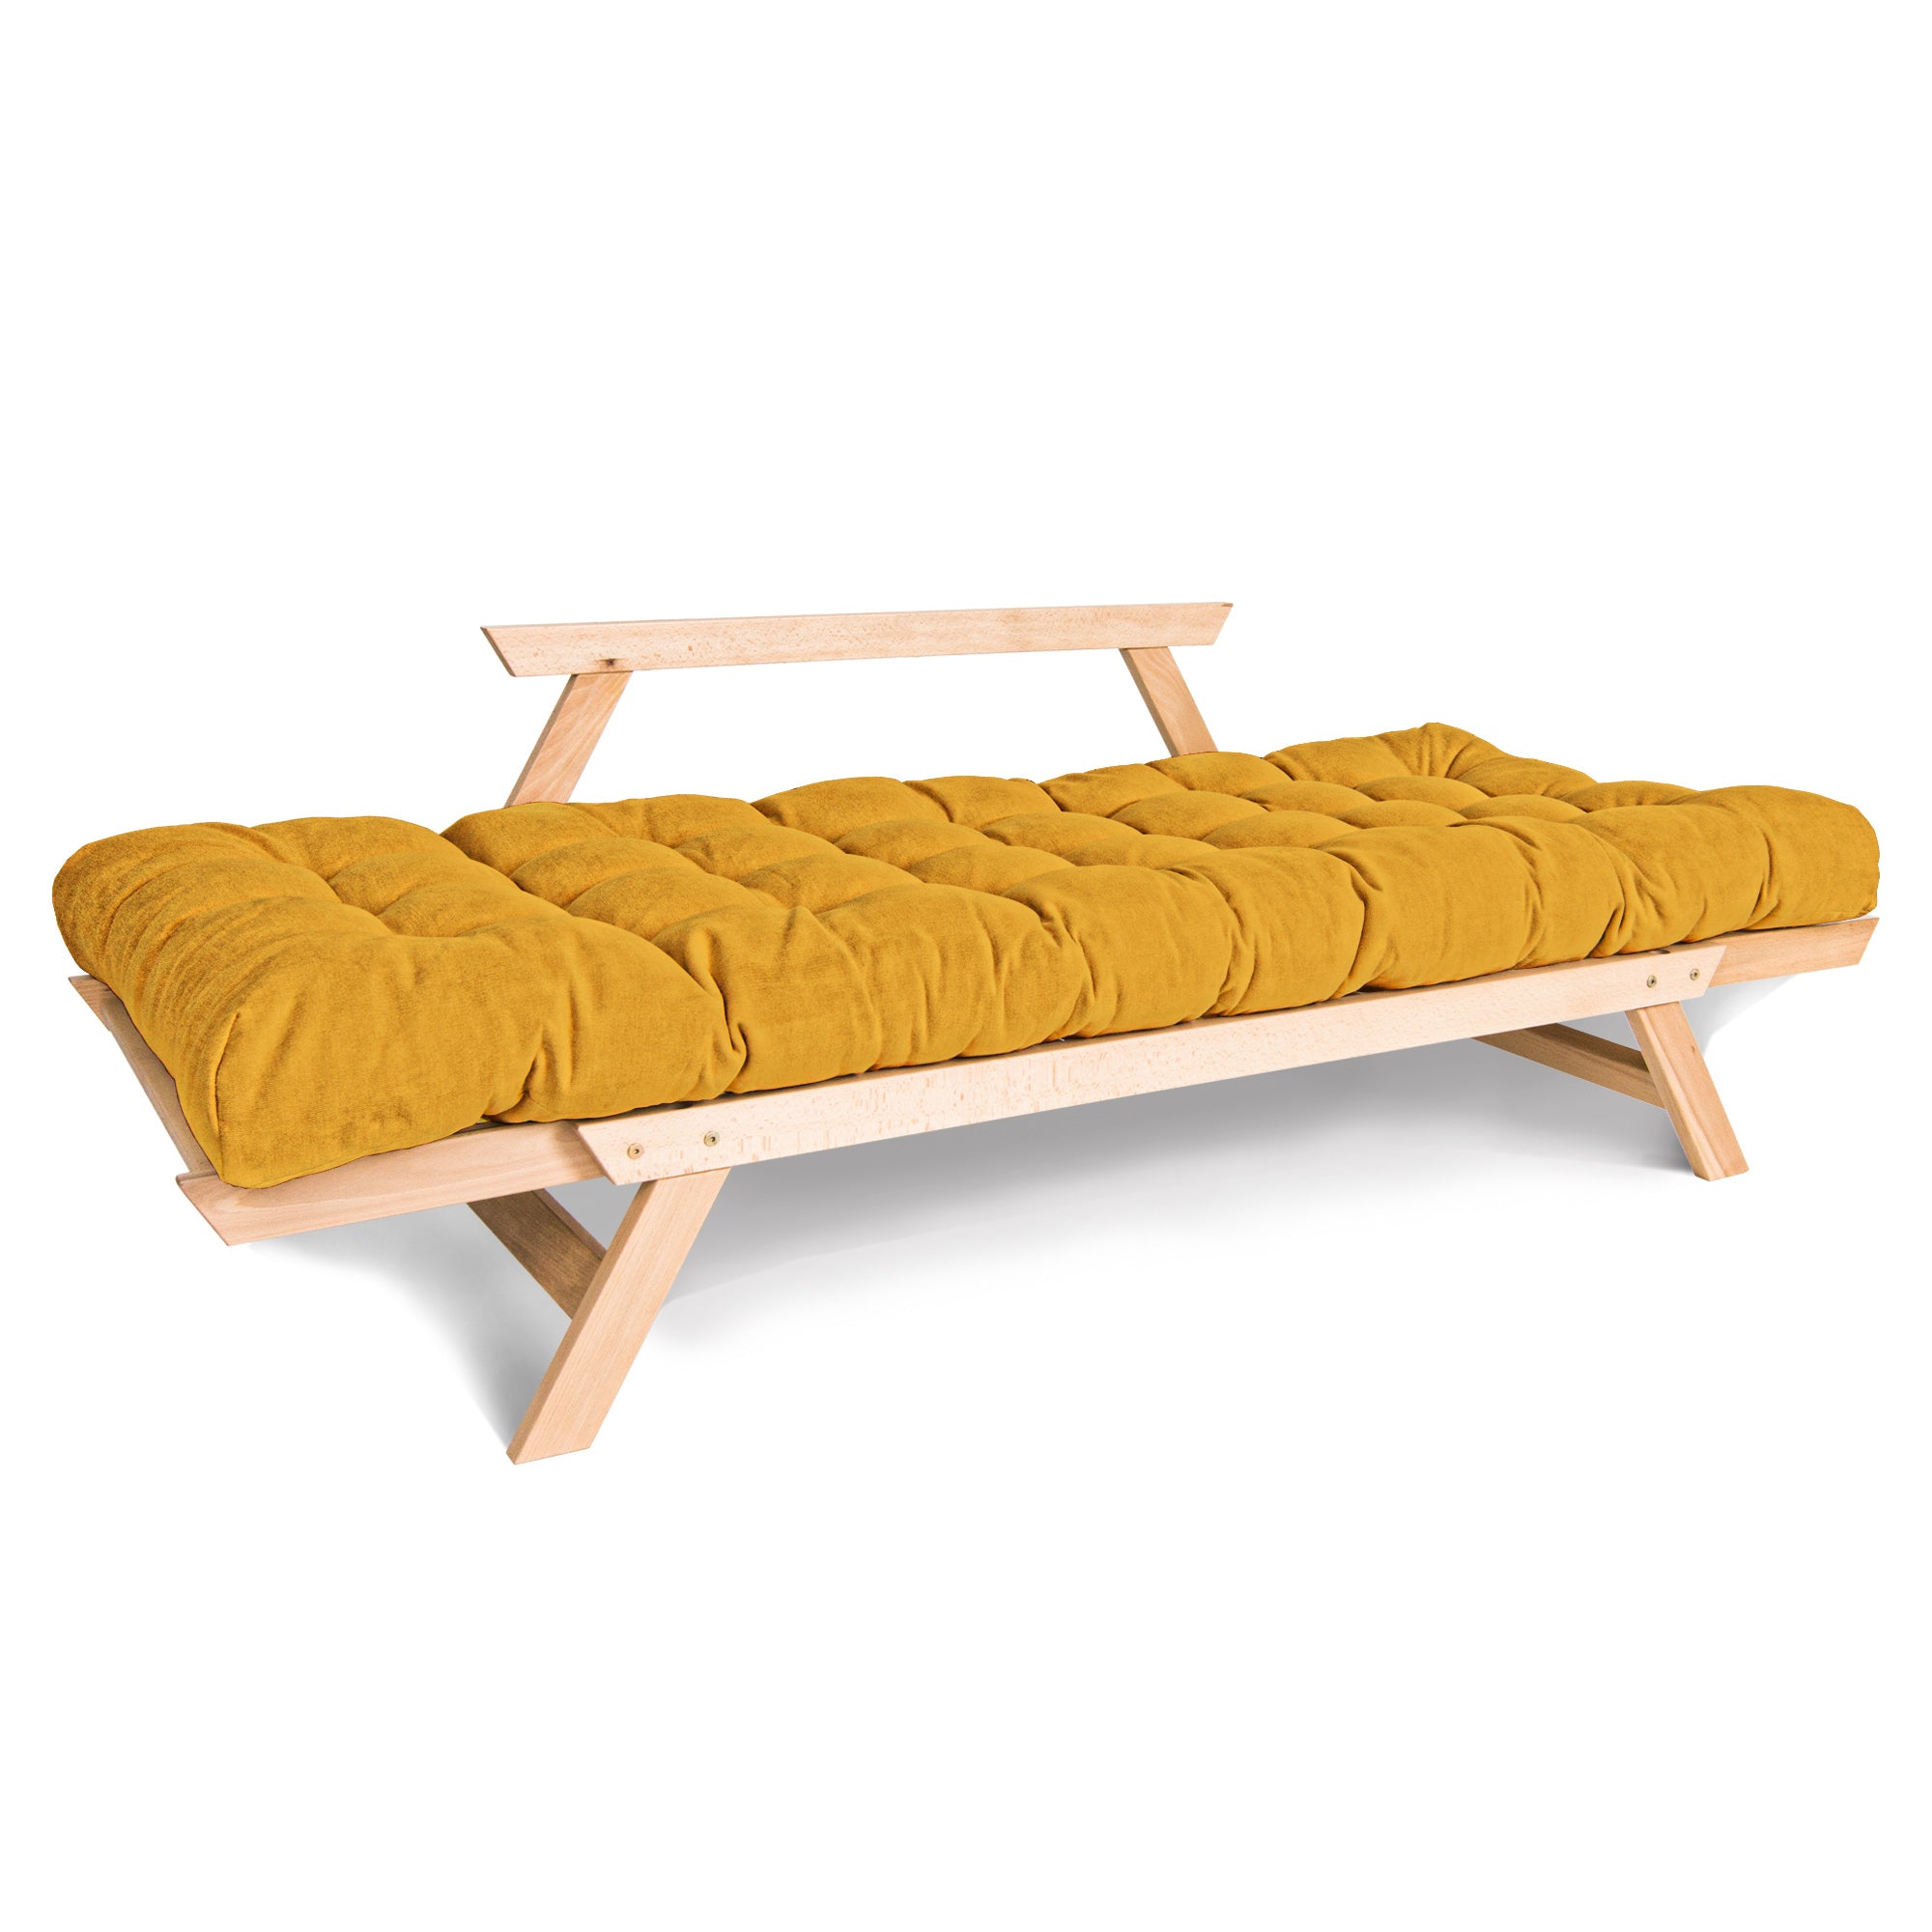 ALLEGRO Folding Sofa Bed, Beech Wood Frame, Natural